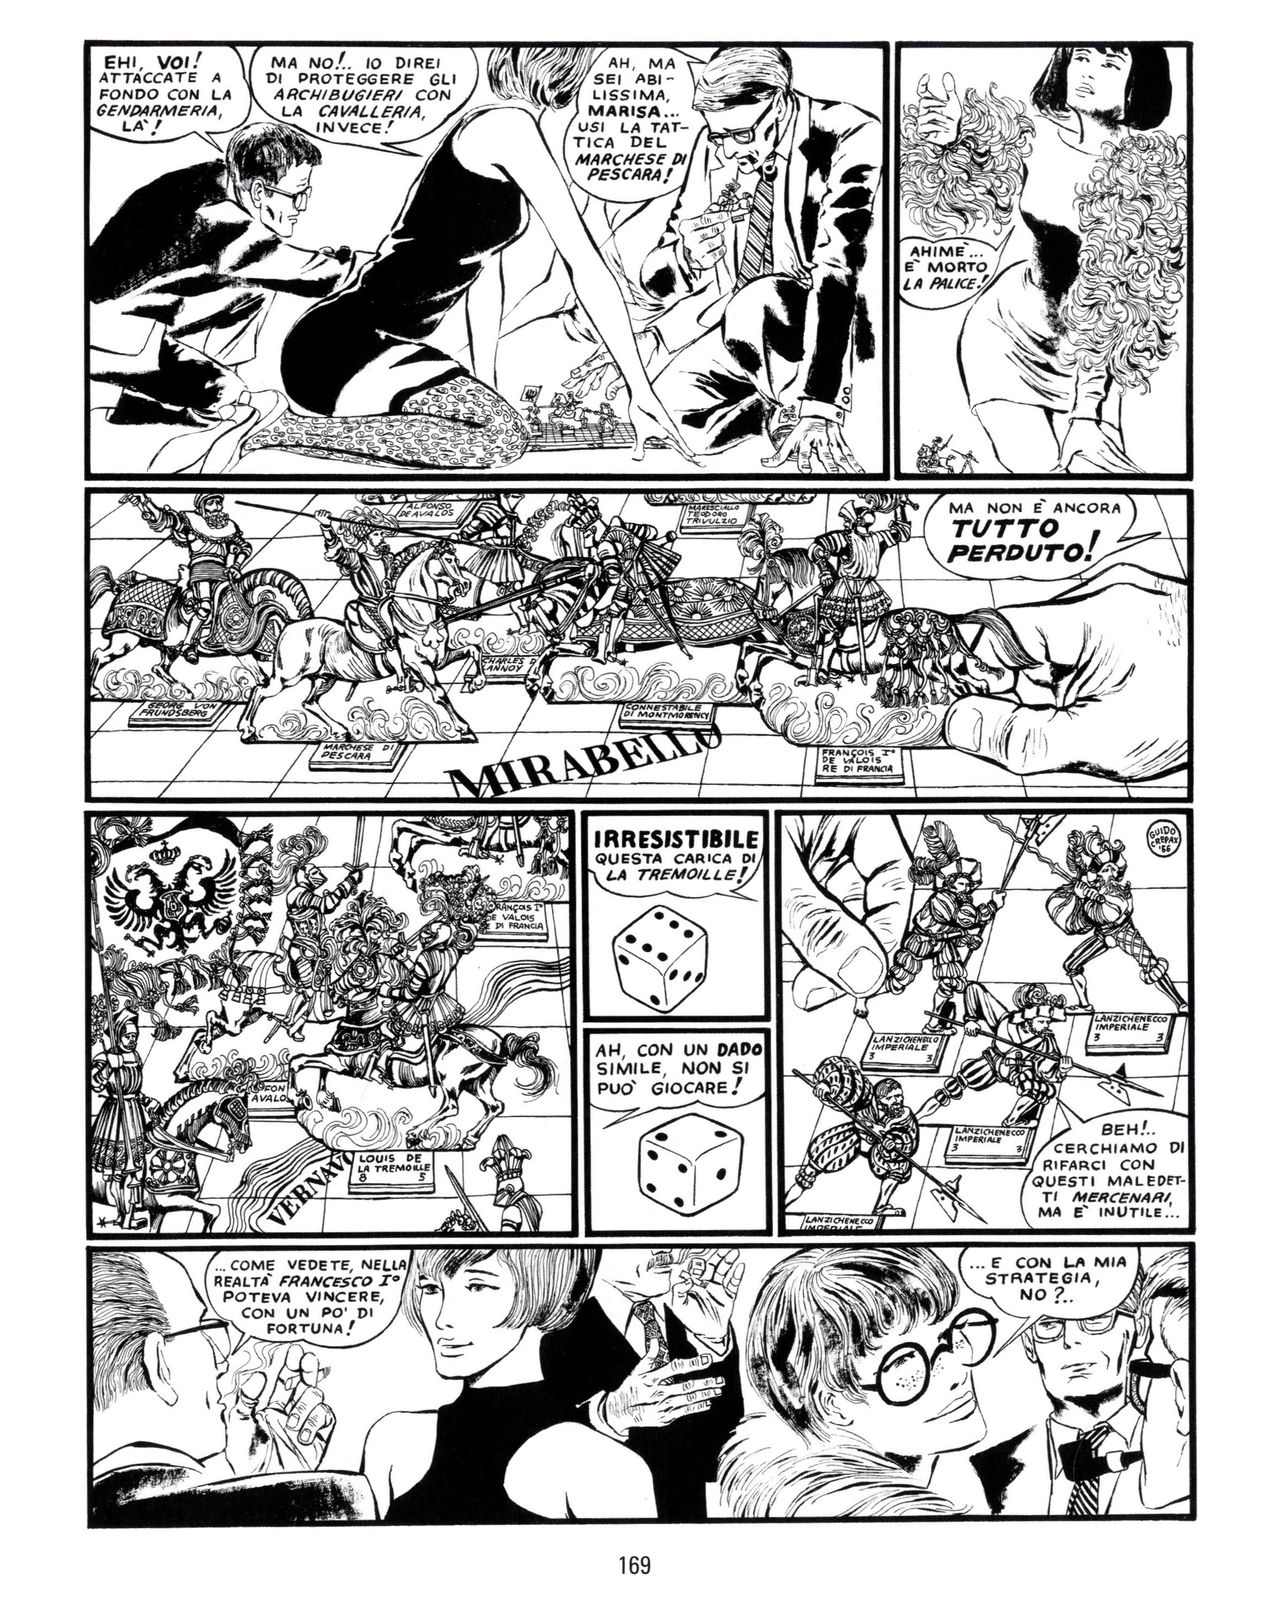 [Guido Crepax] Erotica Fumetti #25 : L'ascesa dei sotterranei : I cavalieri ciechi [Italian] 170